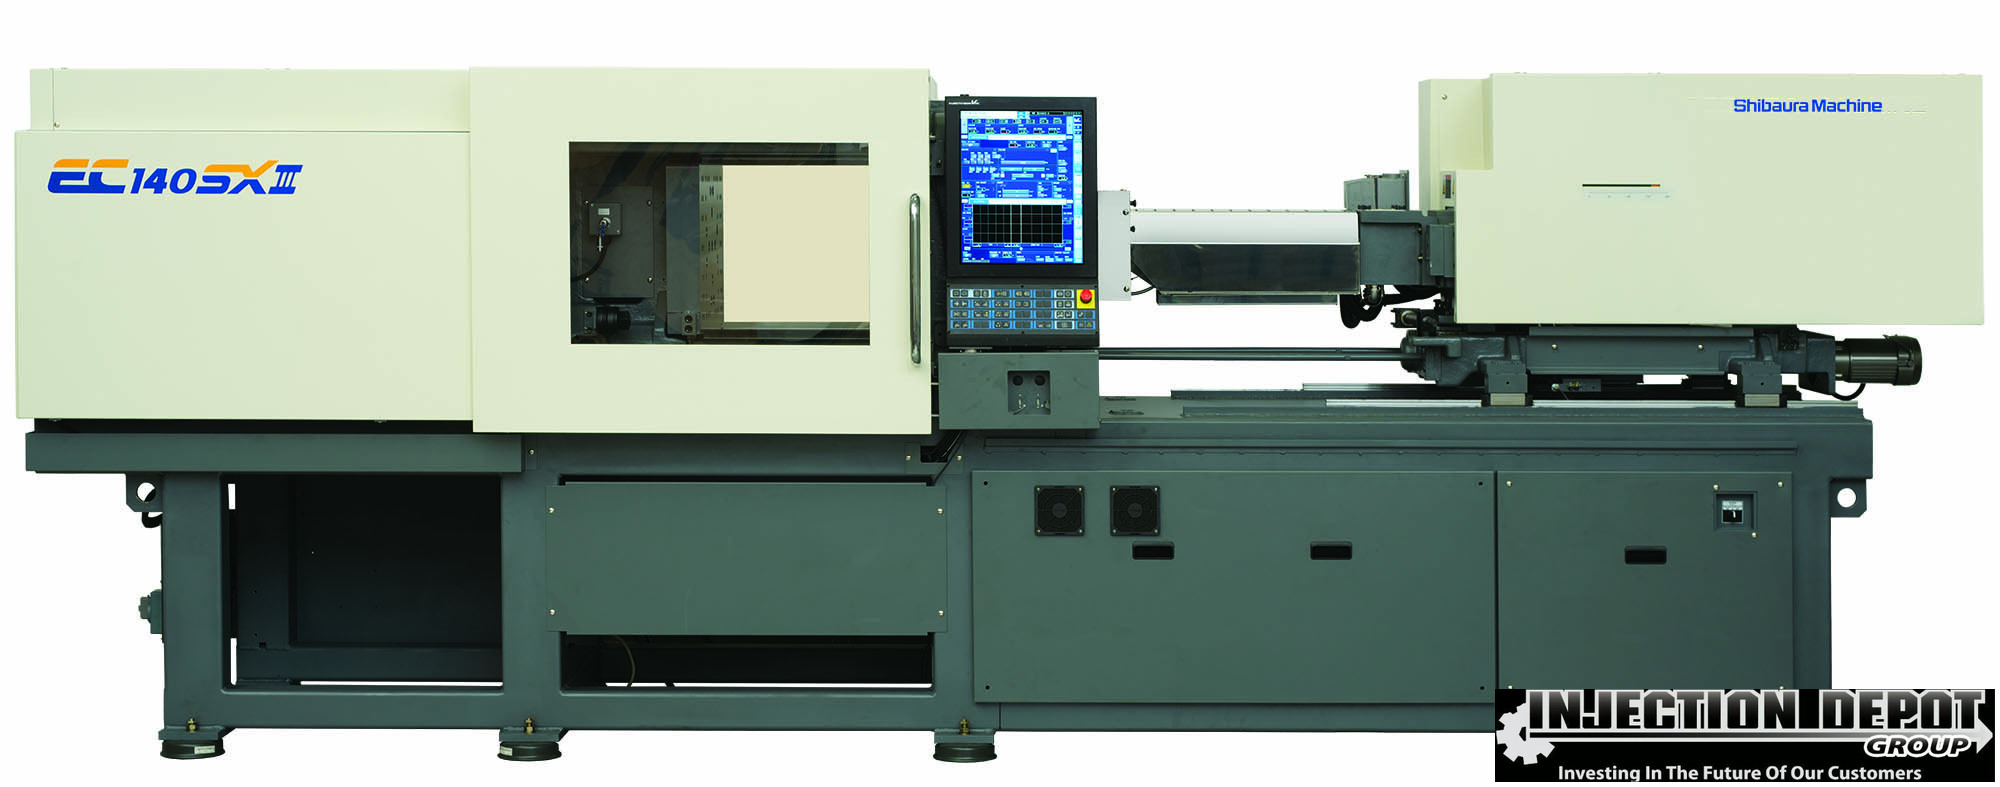 Shibaura Machine EC140SXIIIV70-U34 2A Horizontal Injection Moulding Machines | INJECTION DEPOT GROUP